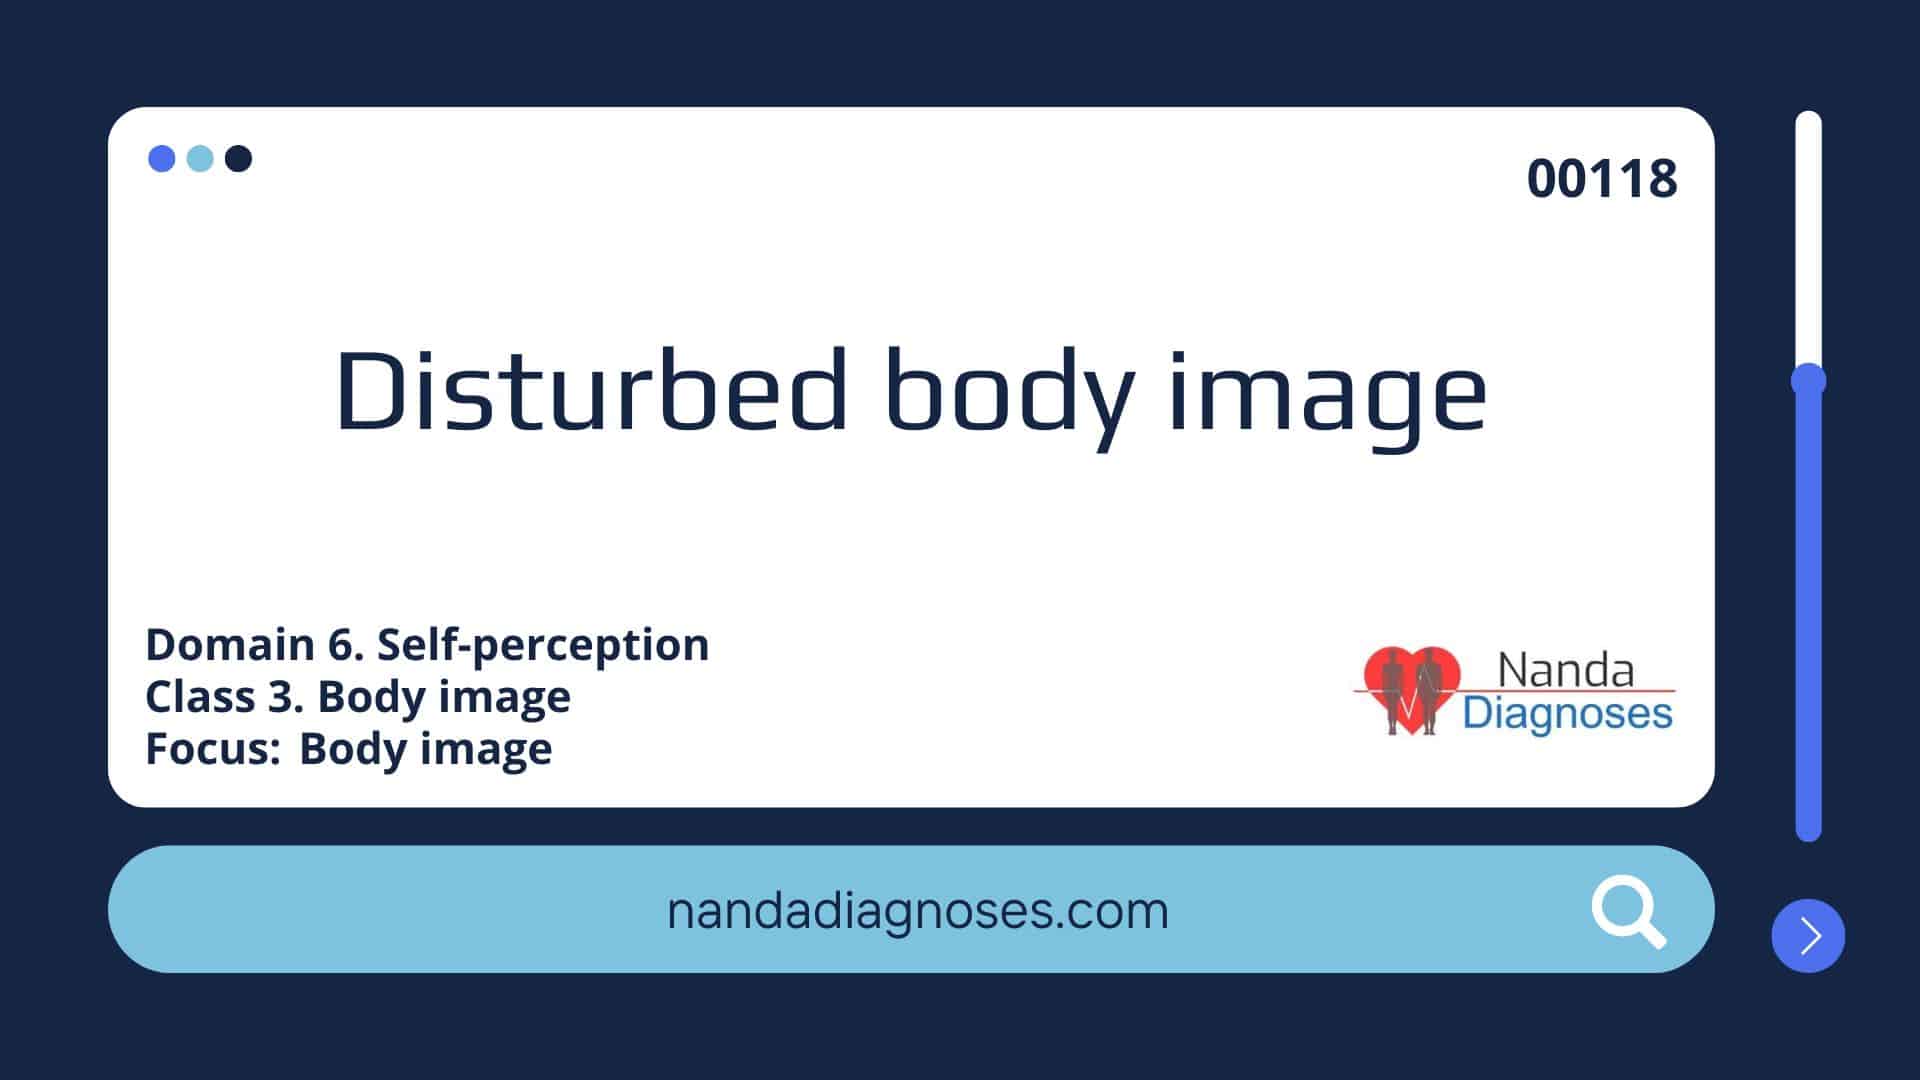 Nursing diagnosis Disturbed body image